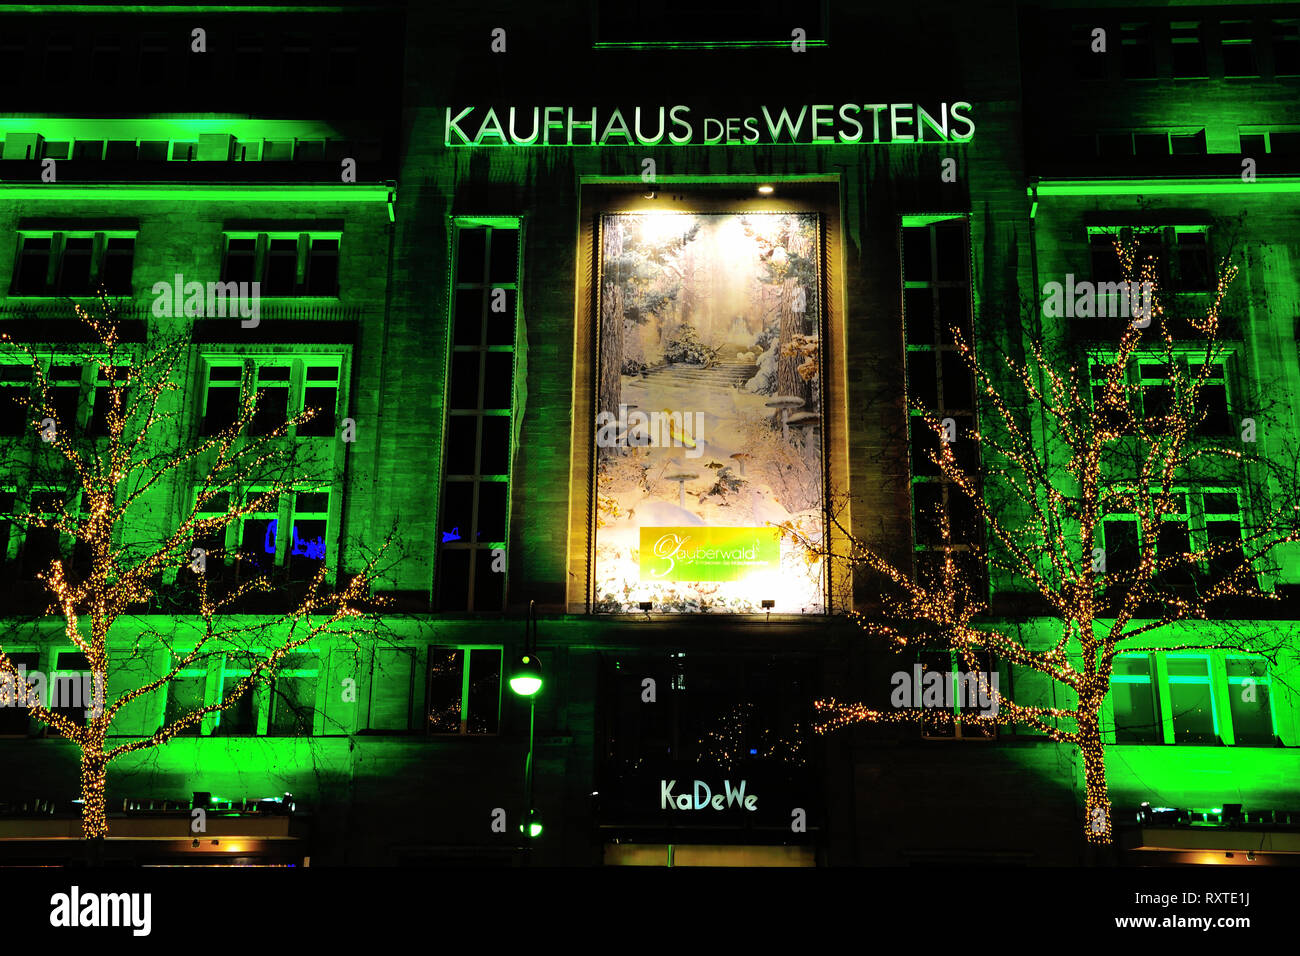 KaDeWE, ka de we, Luxus, Kaufhaus des Westens, berlin, luxus, shopping, first class, germany, Deutchland, kadewe, europe Stock Photo